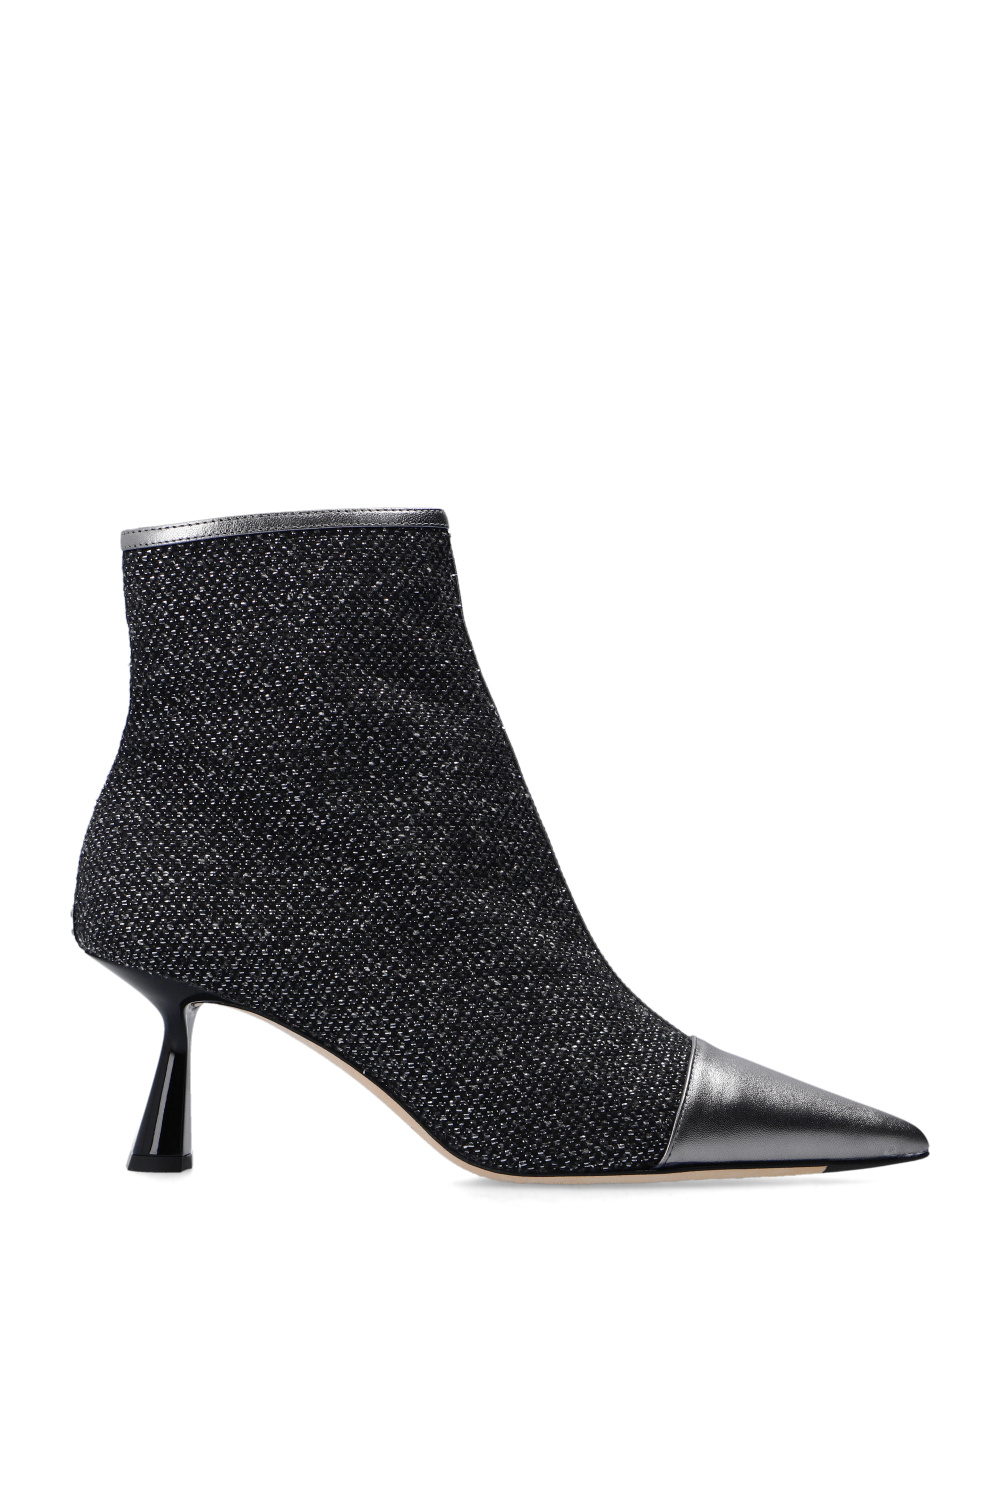 buy public desire single ankle strap sandal - 'Kix' heeled ankle